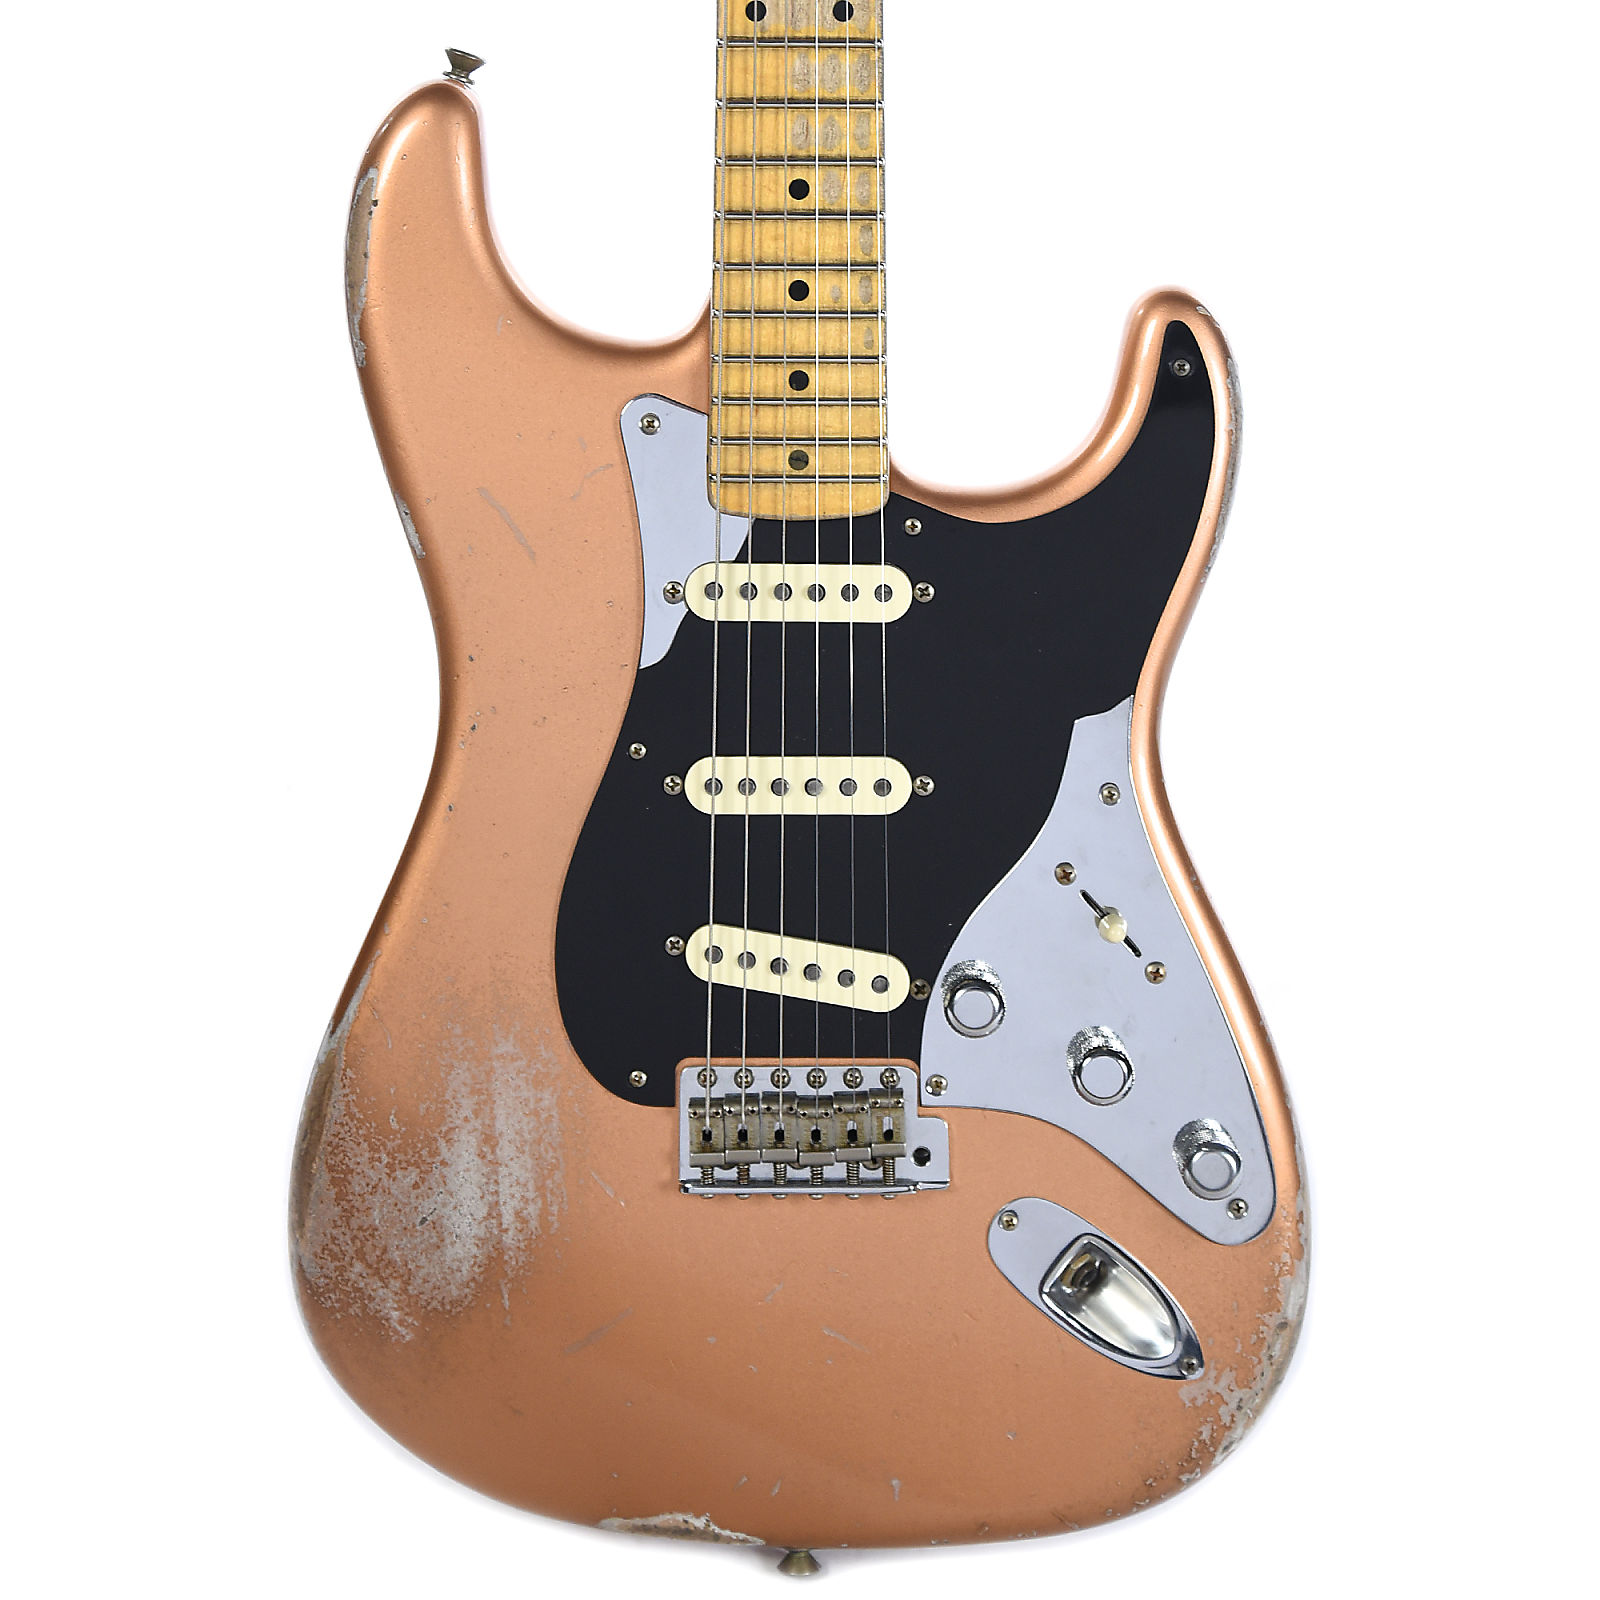 Fender Stratocaster Corona California Serial Number Z0040302